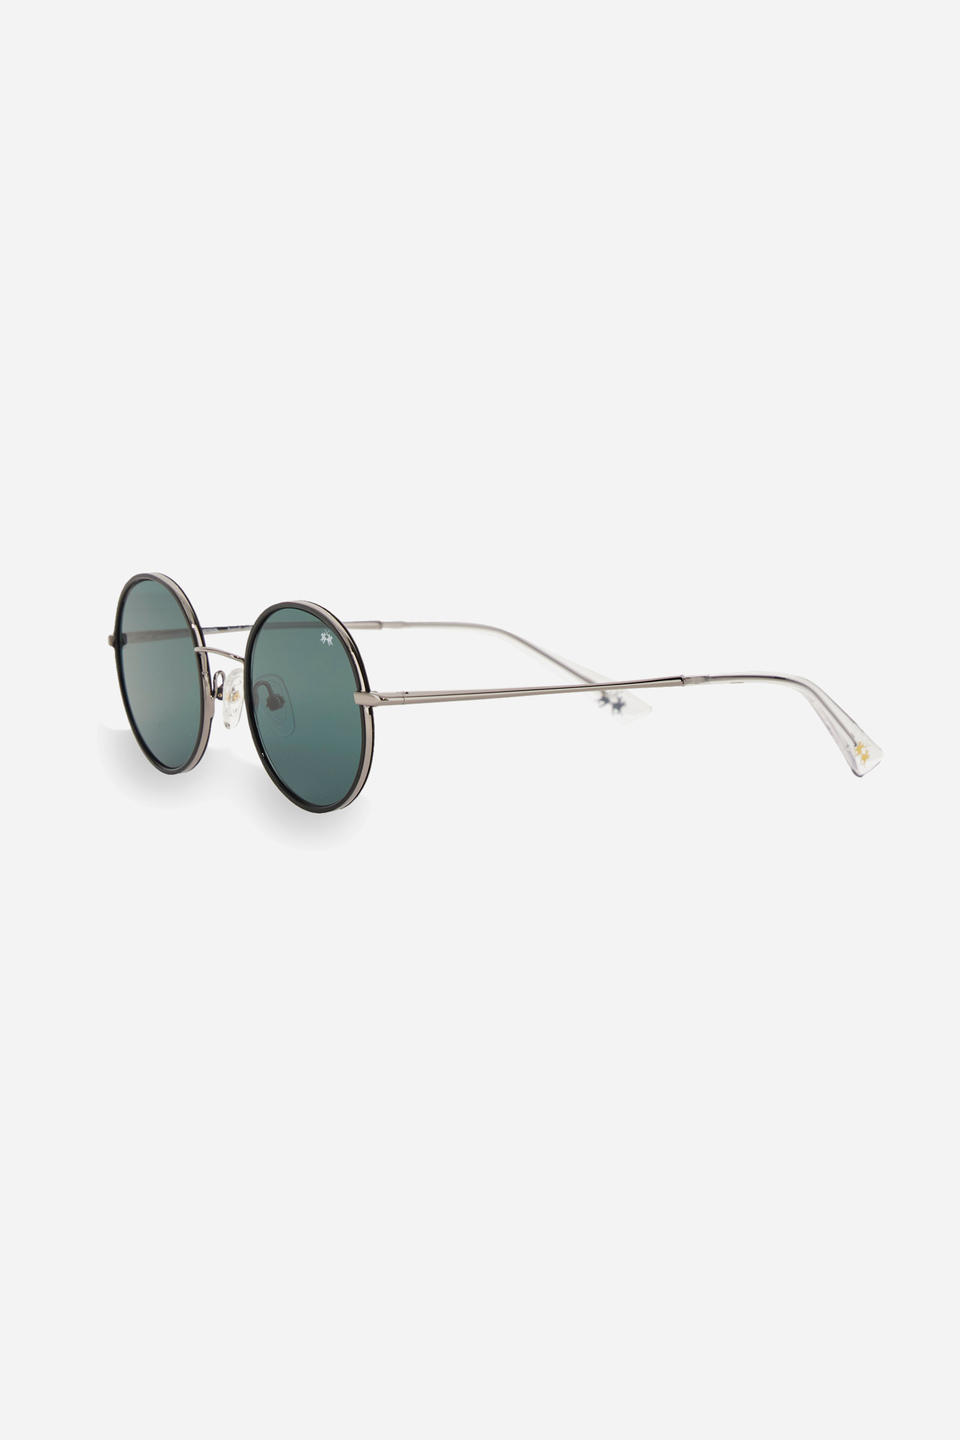 Sonnenbrille mit rundem Gestell | La Martina - Official Online Shop